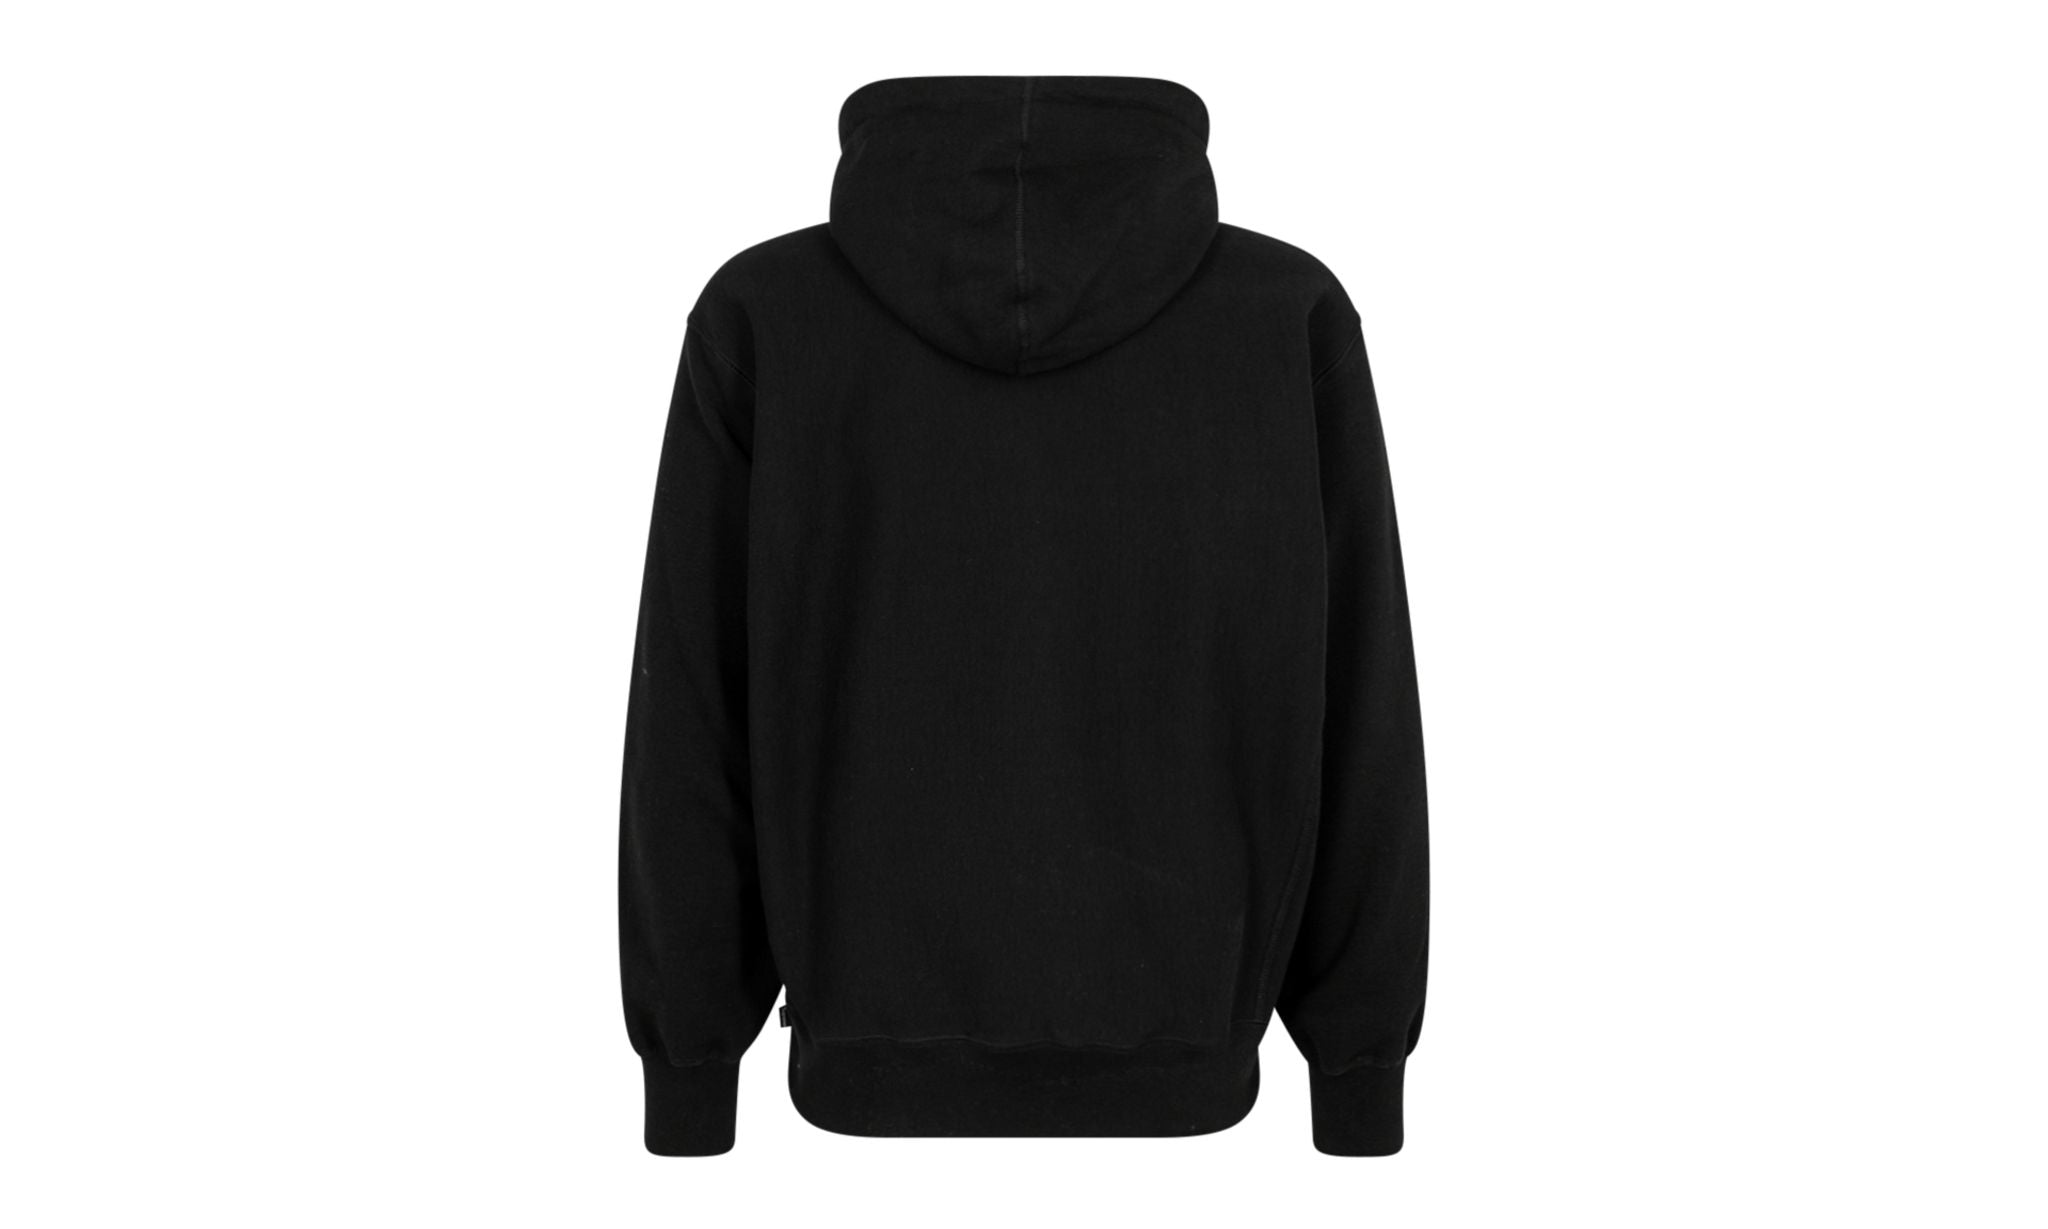 Supreme Capital Hooded Sweatshirt Men's Black